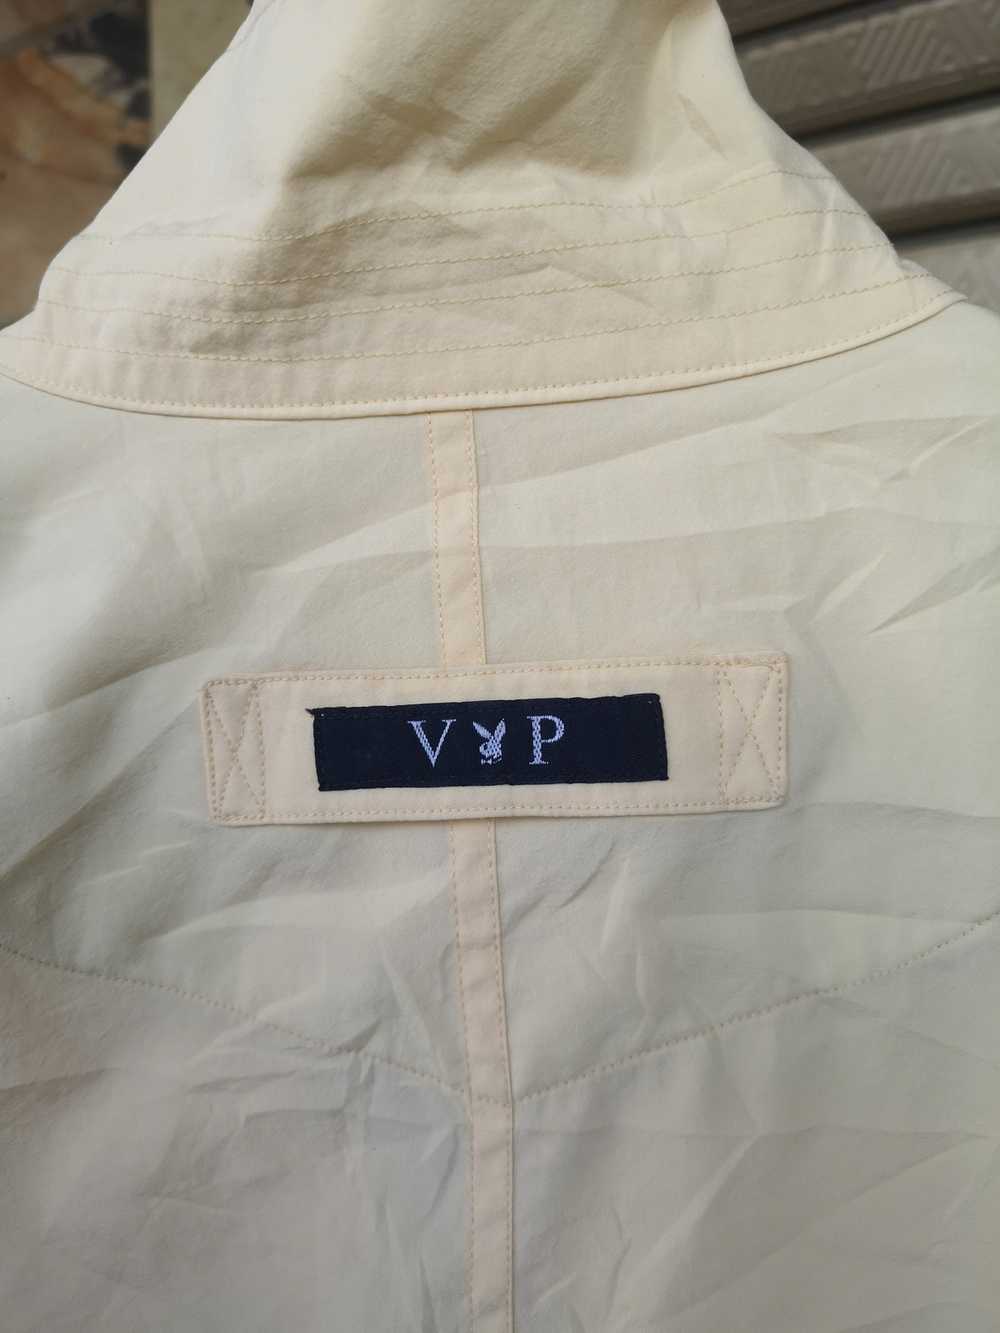 Playboy VIP Playboy Collection Jacket - image 6